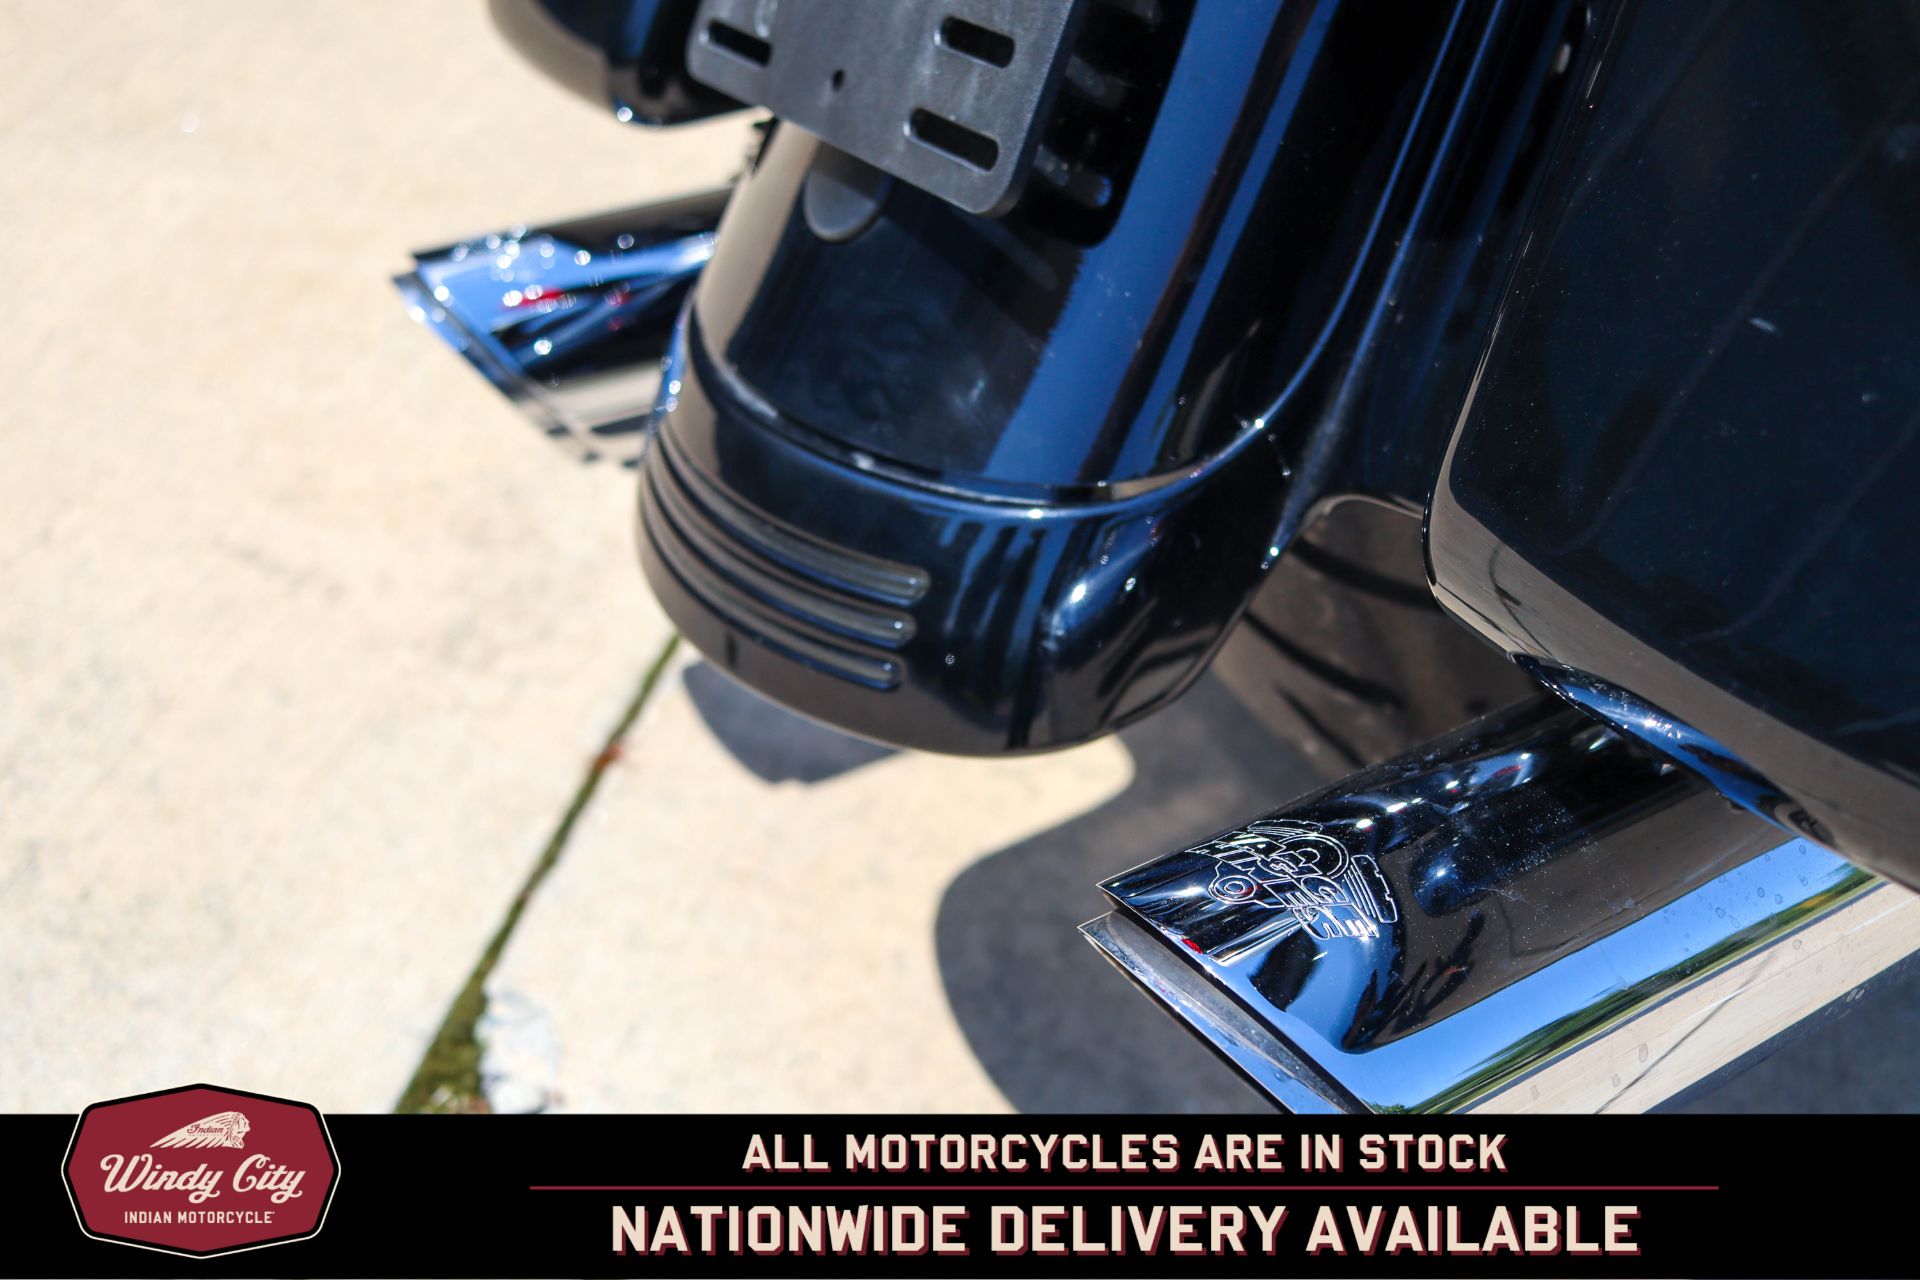 2014 Harley-Davidson Street Glide® in Lake Villa, Illinois - Photo 4